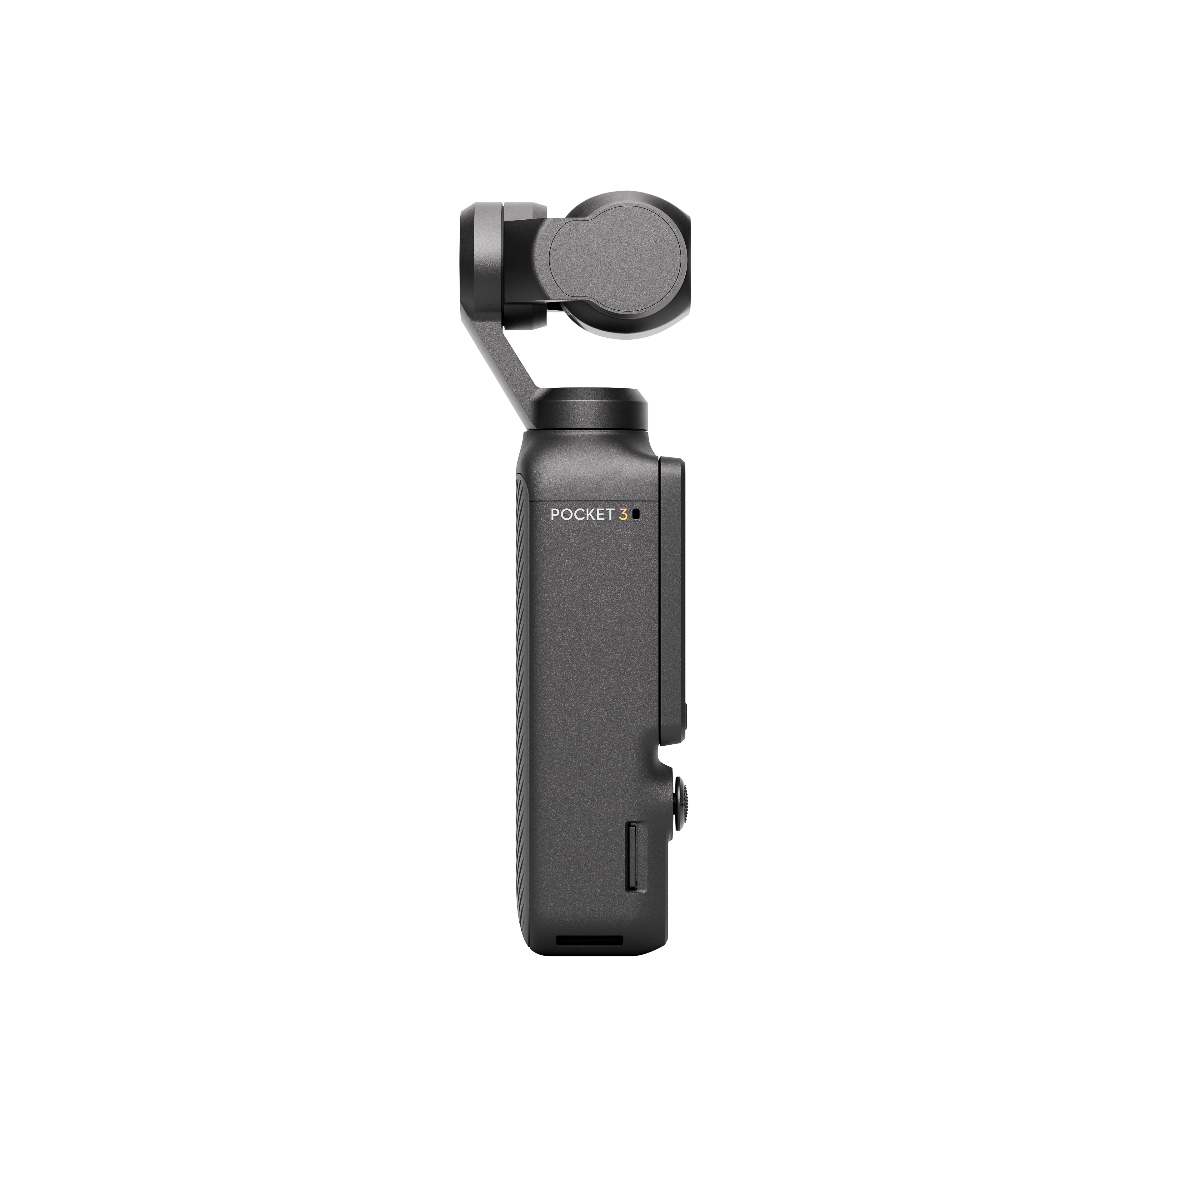 Osmo Pocket 3 Handheld Pocket Gimbal Camera 1-Inch CMOS & 4K/120fps